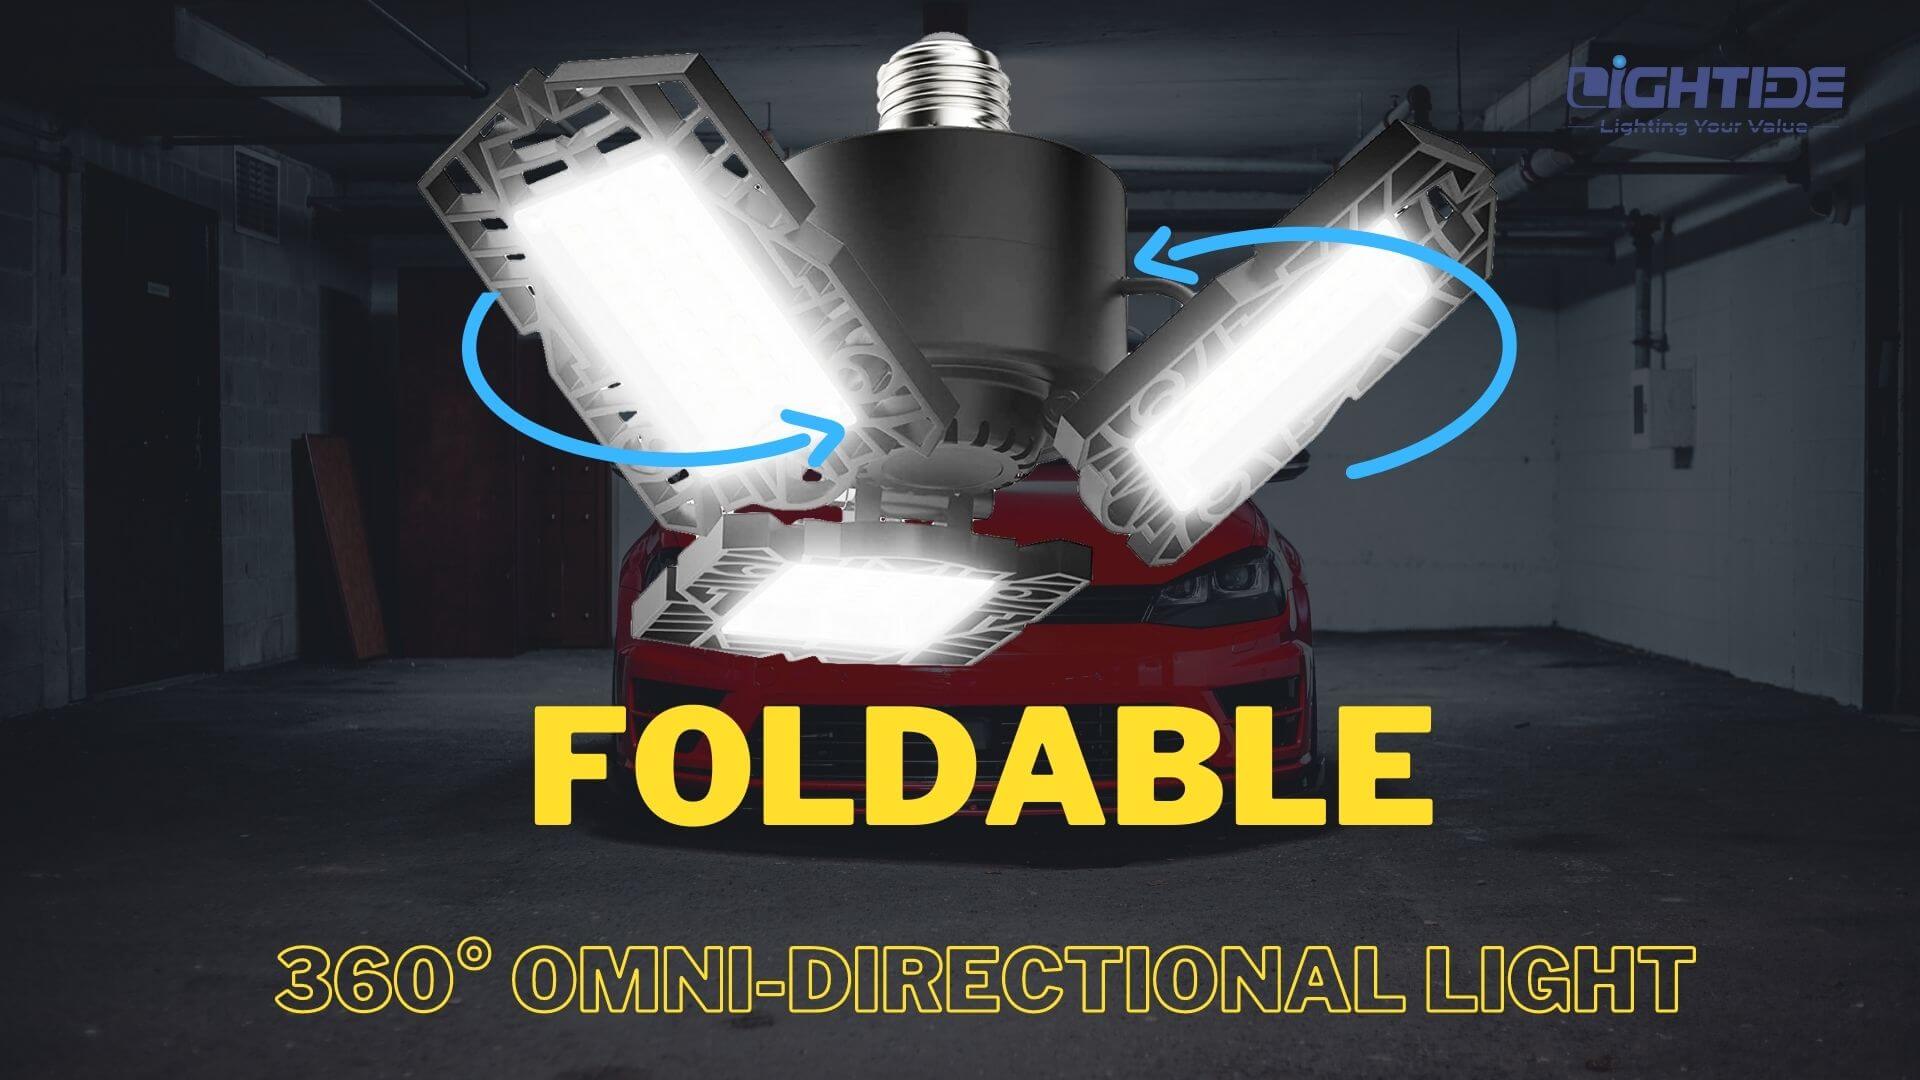 Lightide foldable LED Parking Garage Light lamps 60w-120w